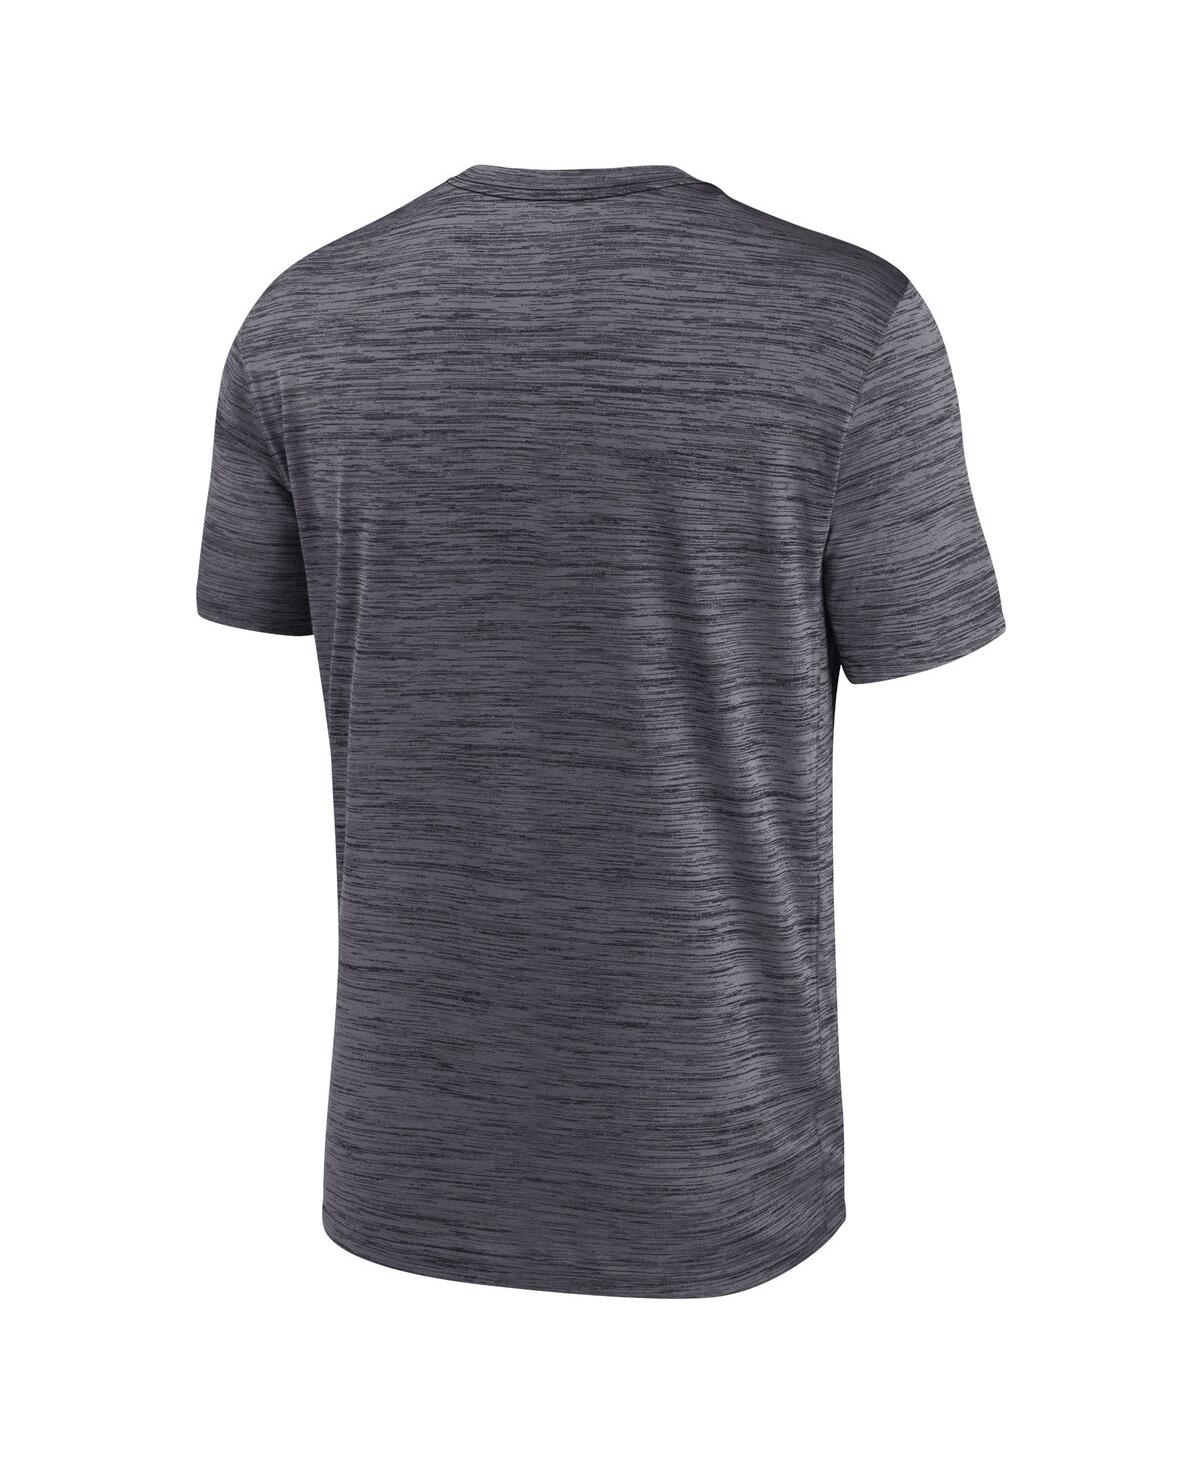 Shop Nike Men's  Black Arizona Diamondbacks Wordmark Velocity Performance T-shirt